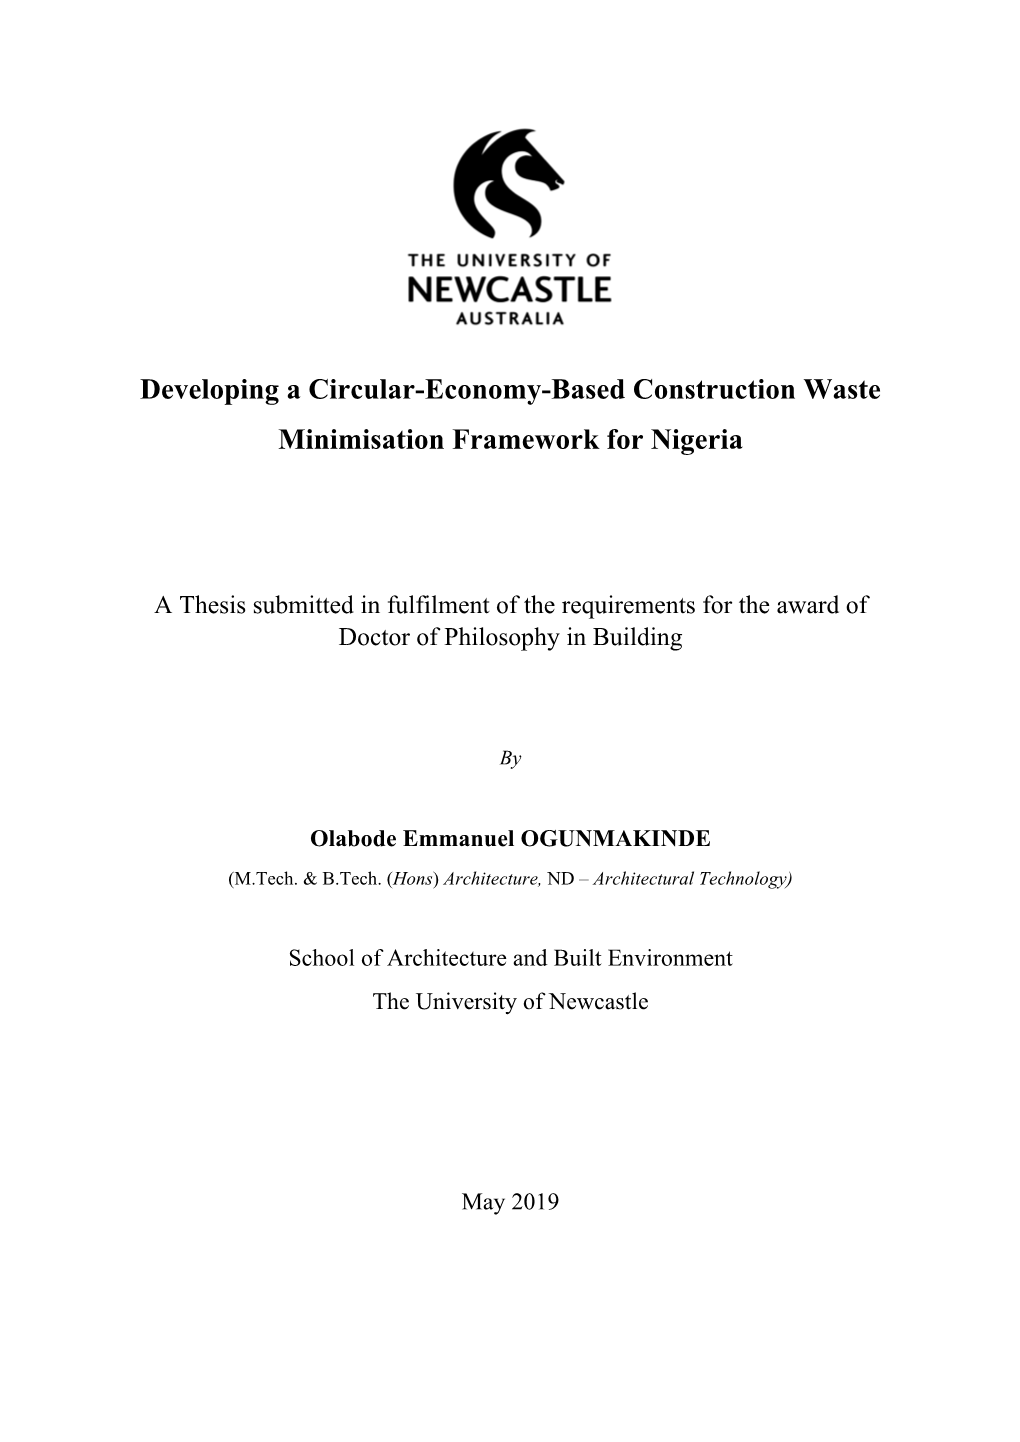 Developing a Circular-Economy-Based Construction Waste Minimisation Framework for Nigeria